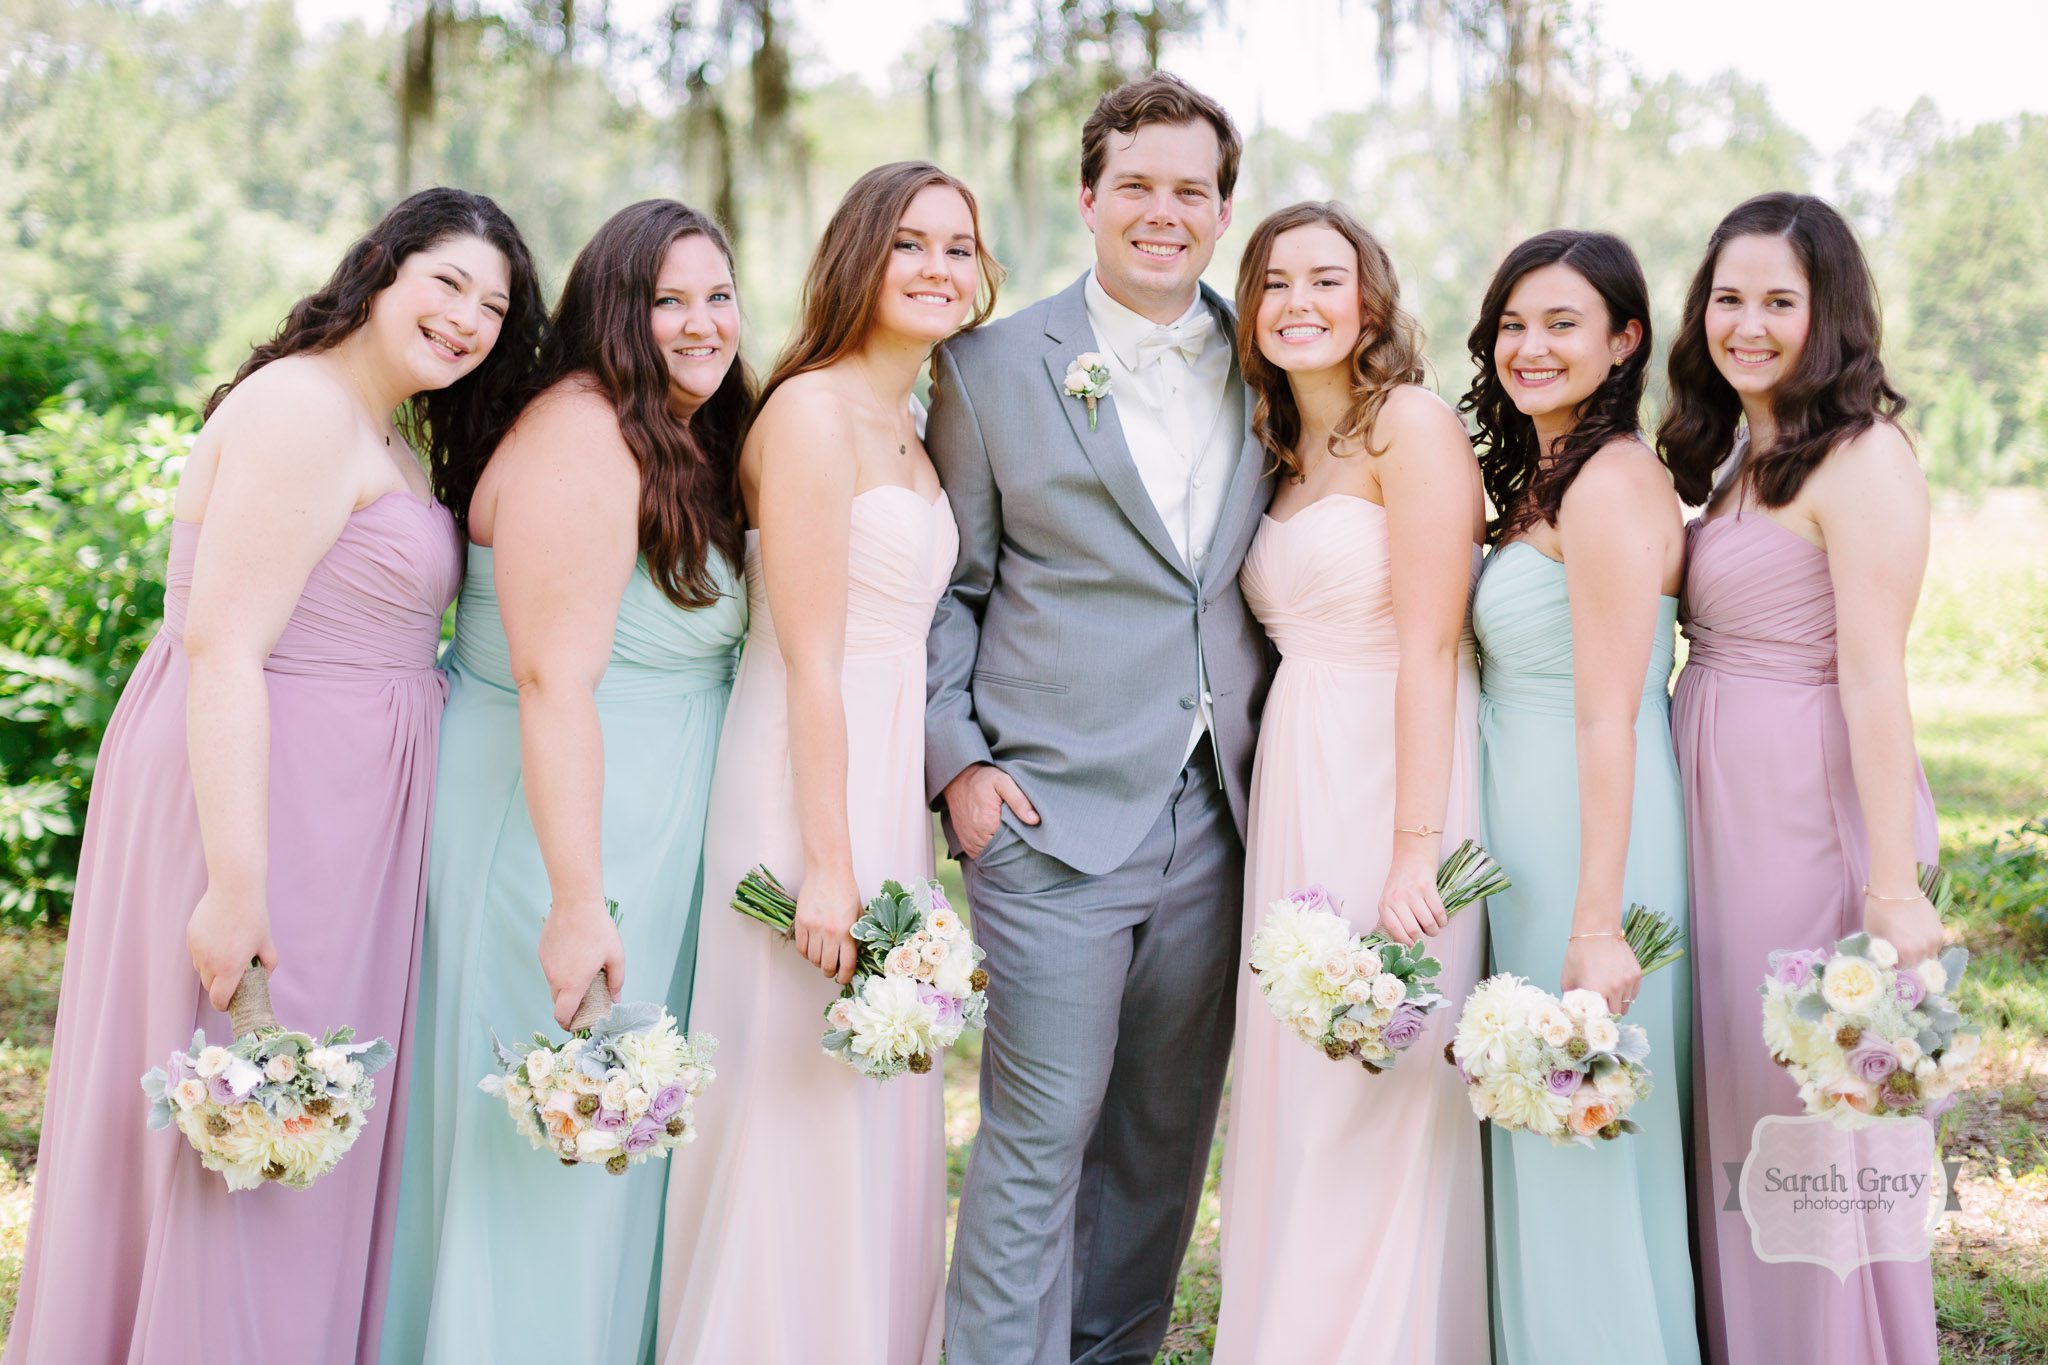 Sarah Gray Photography | Tallahassee Florida Wedding Photographer